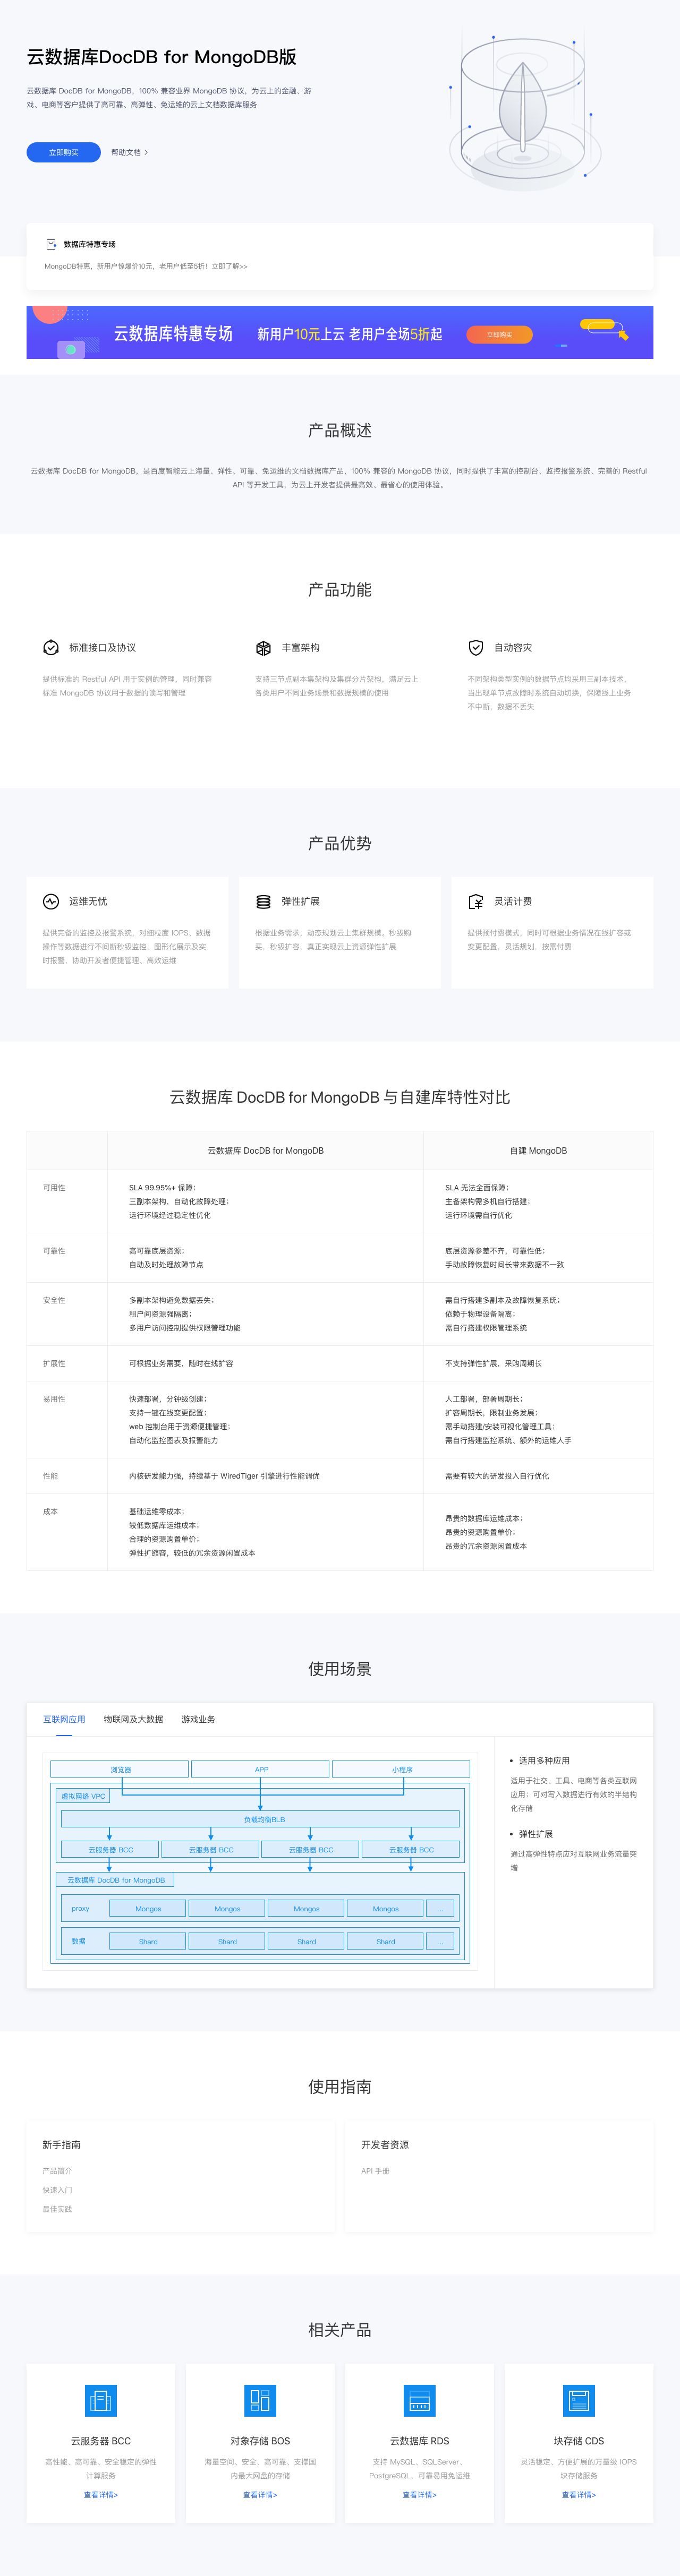 云数据库DocDB for MongoDB版-解决方案介绍